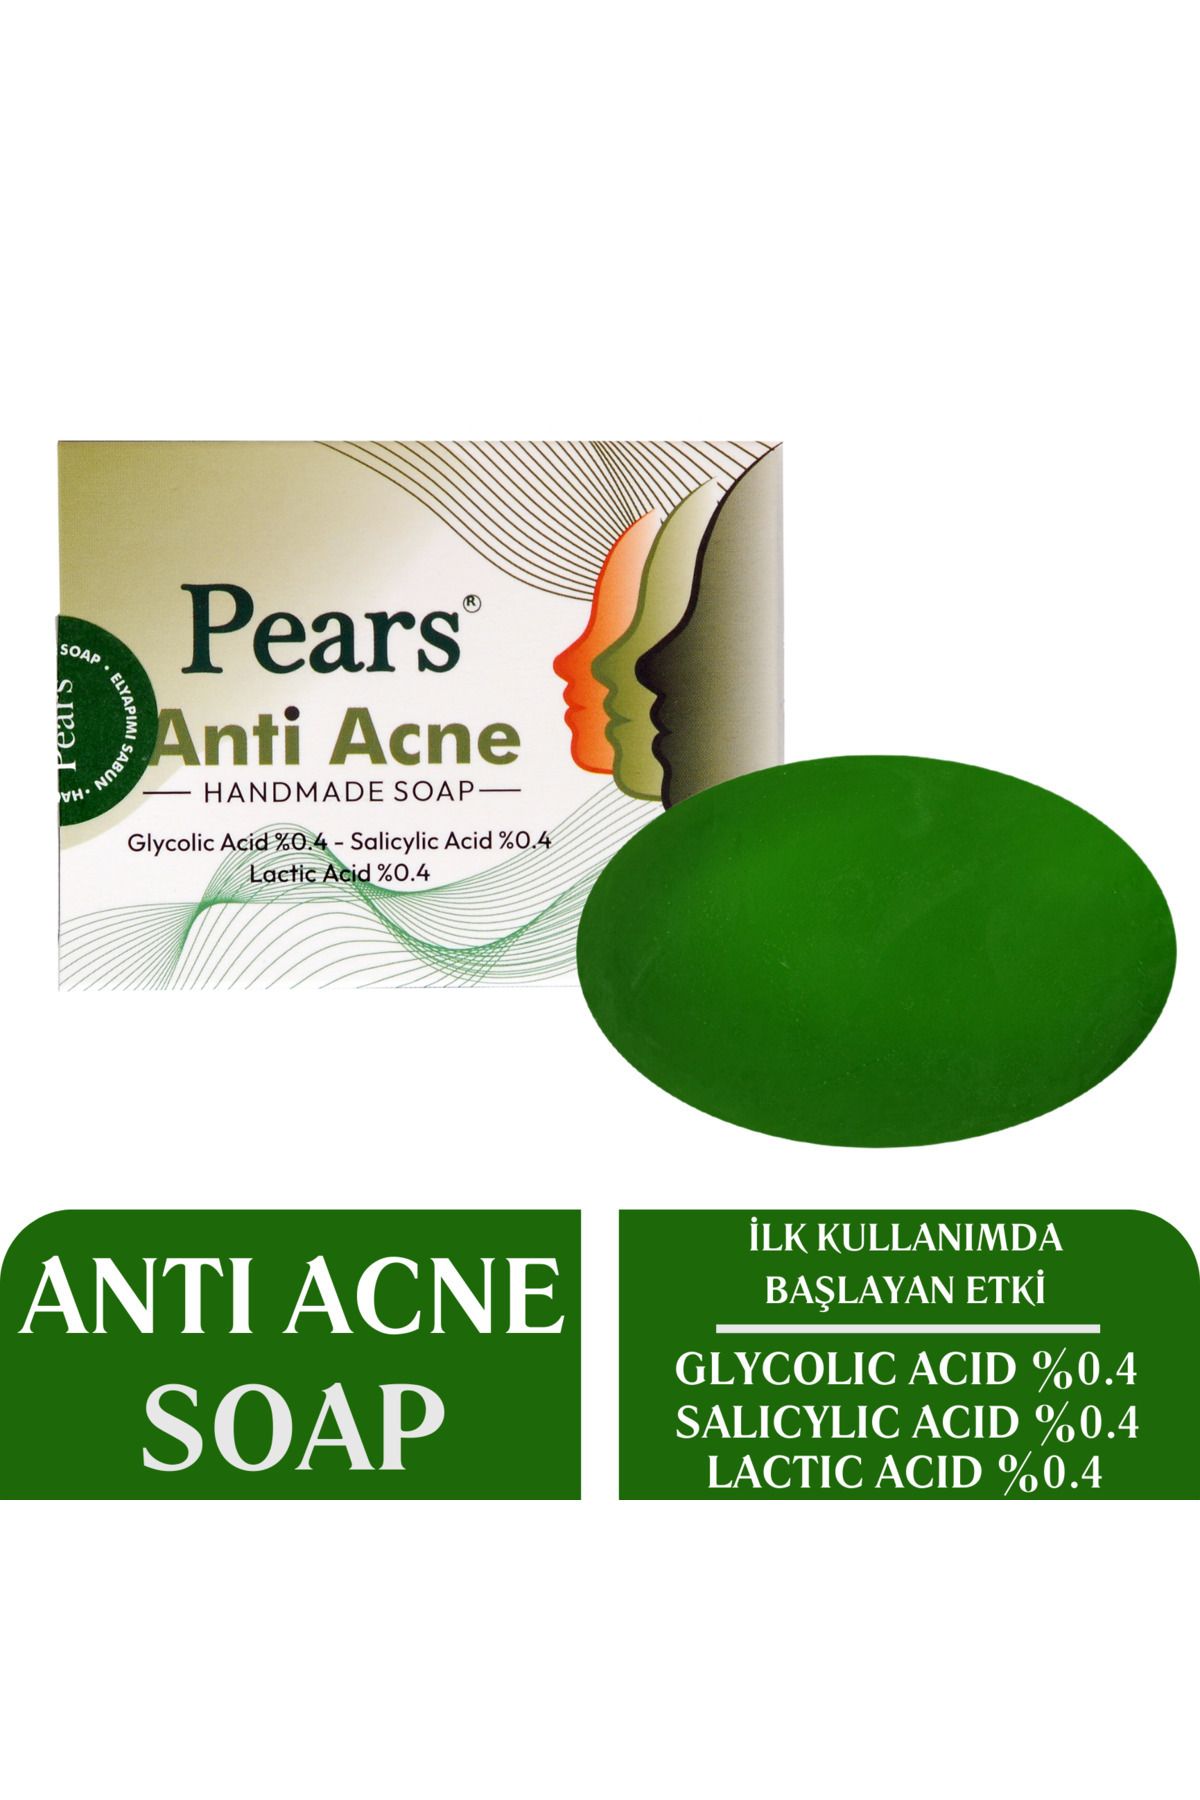 Pears Original Acne Soap With Glycerine + Gliserinli Siyah Nokta, Akne ve Sivilce Karşıtı Sabun 120g